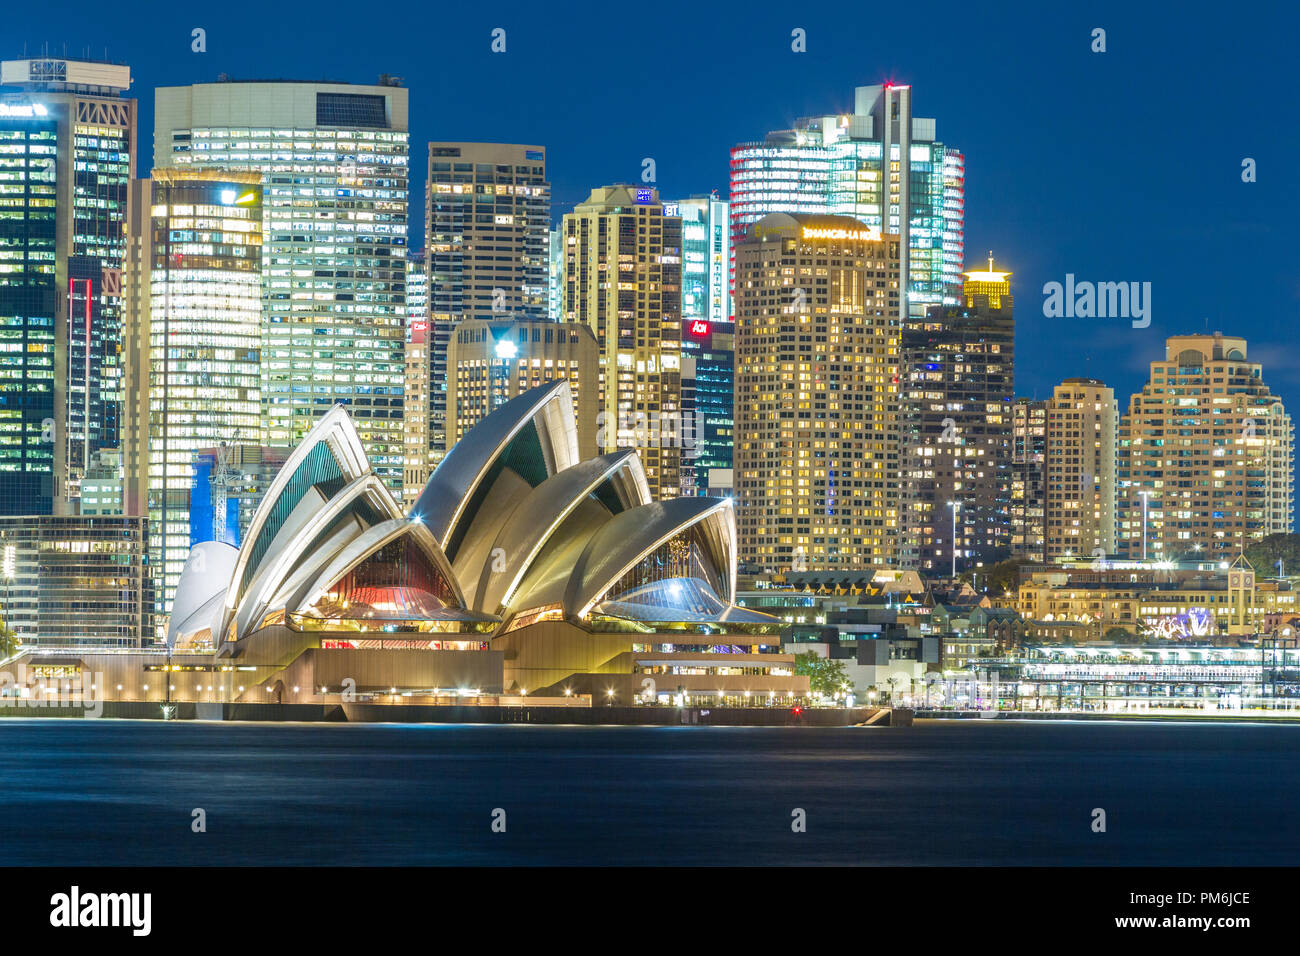 the-city-of-sydney-australia-including-sydney-opera-house-seen-by-night-PM6JCE.jpg